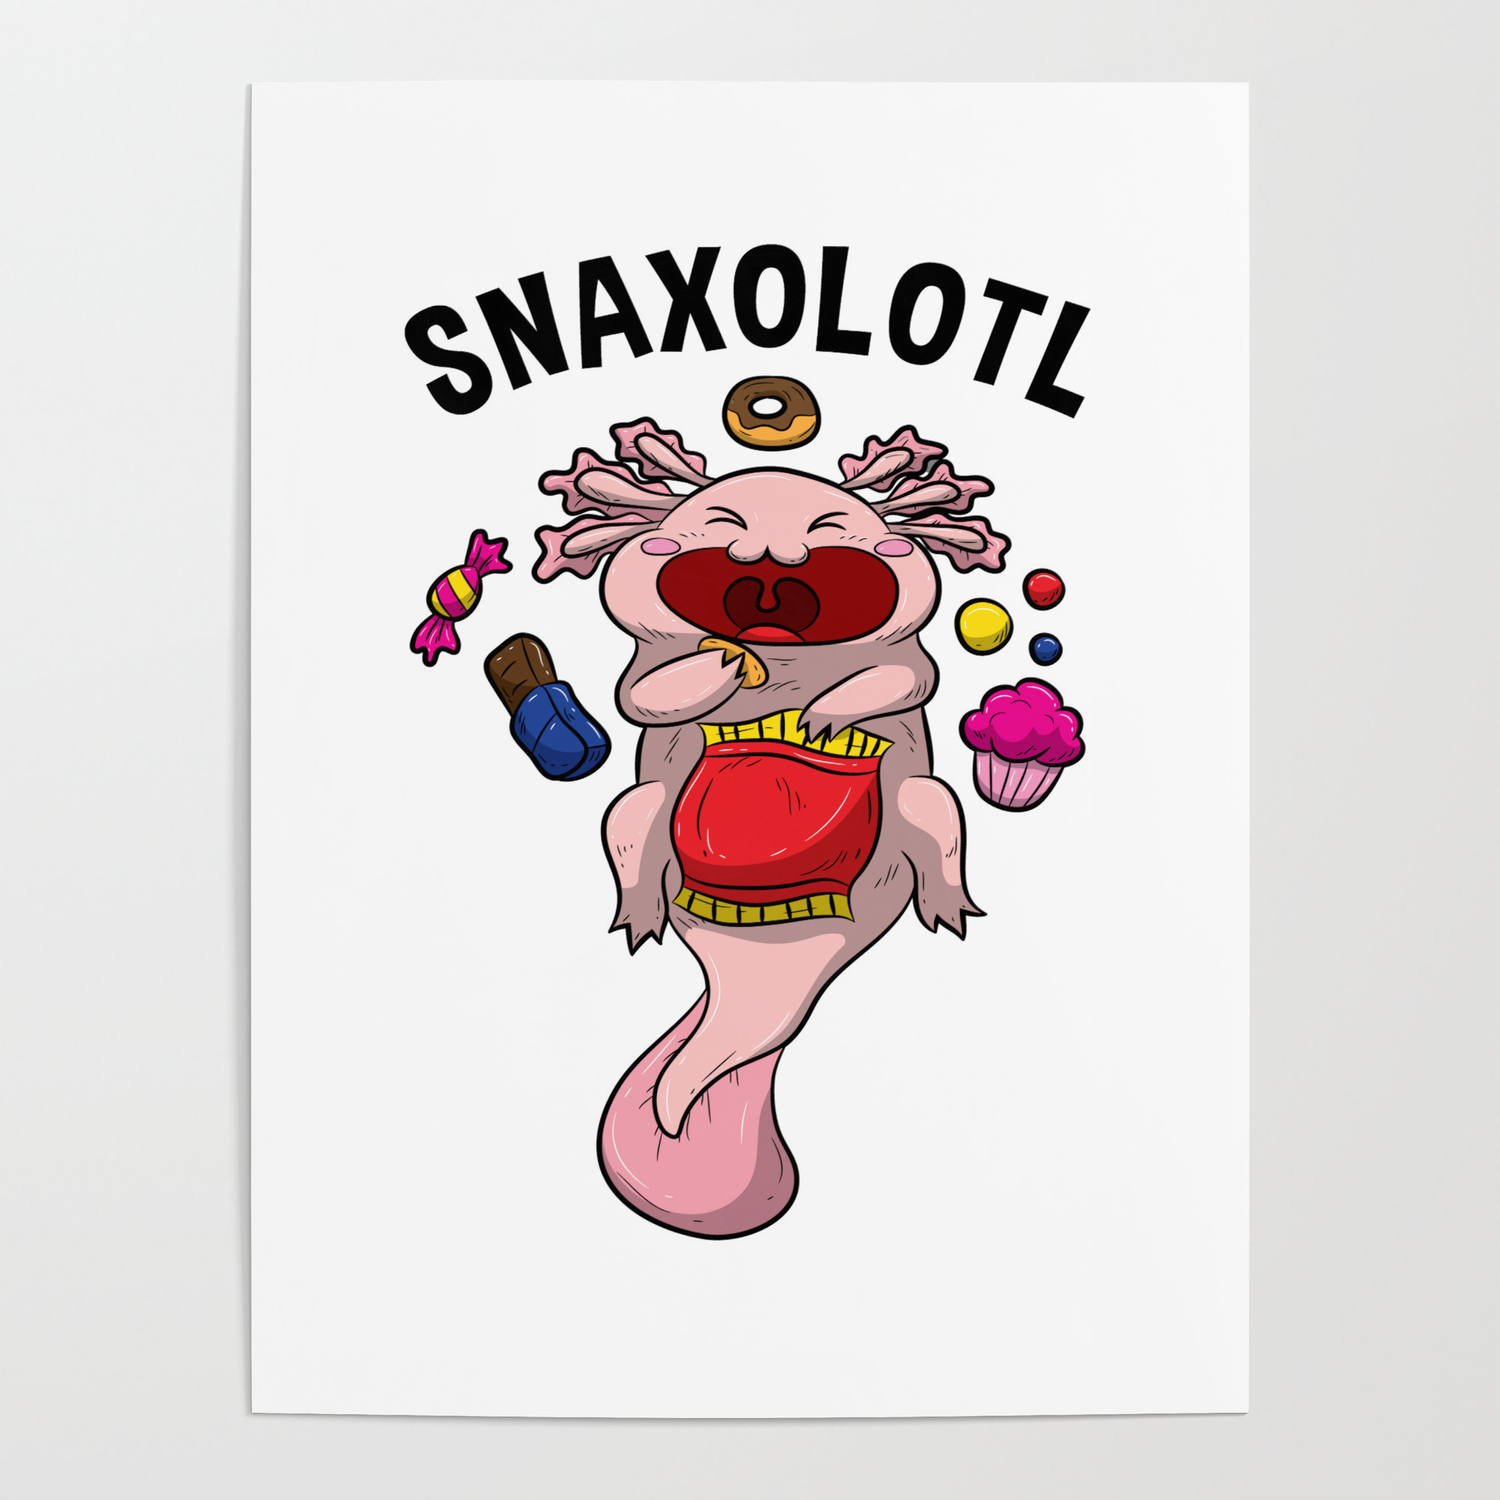 Axolotl Snaxolotl Shirt Funny Animal Pet Puns Kids Poster by Born Design |  Society6